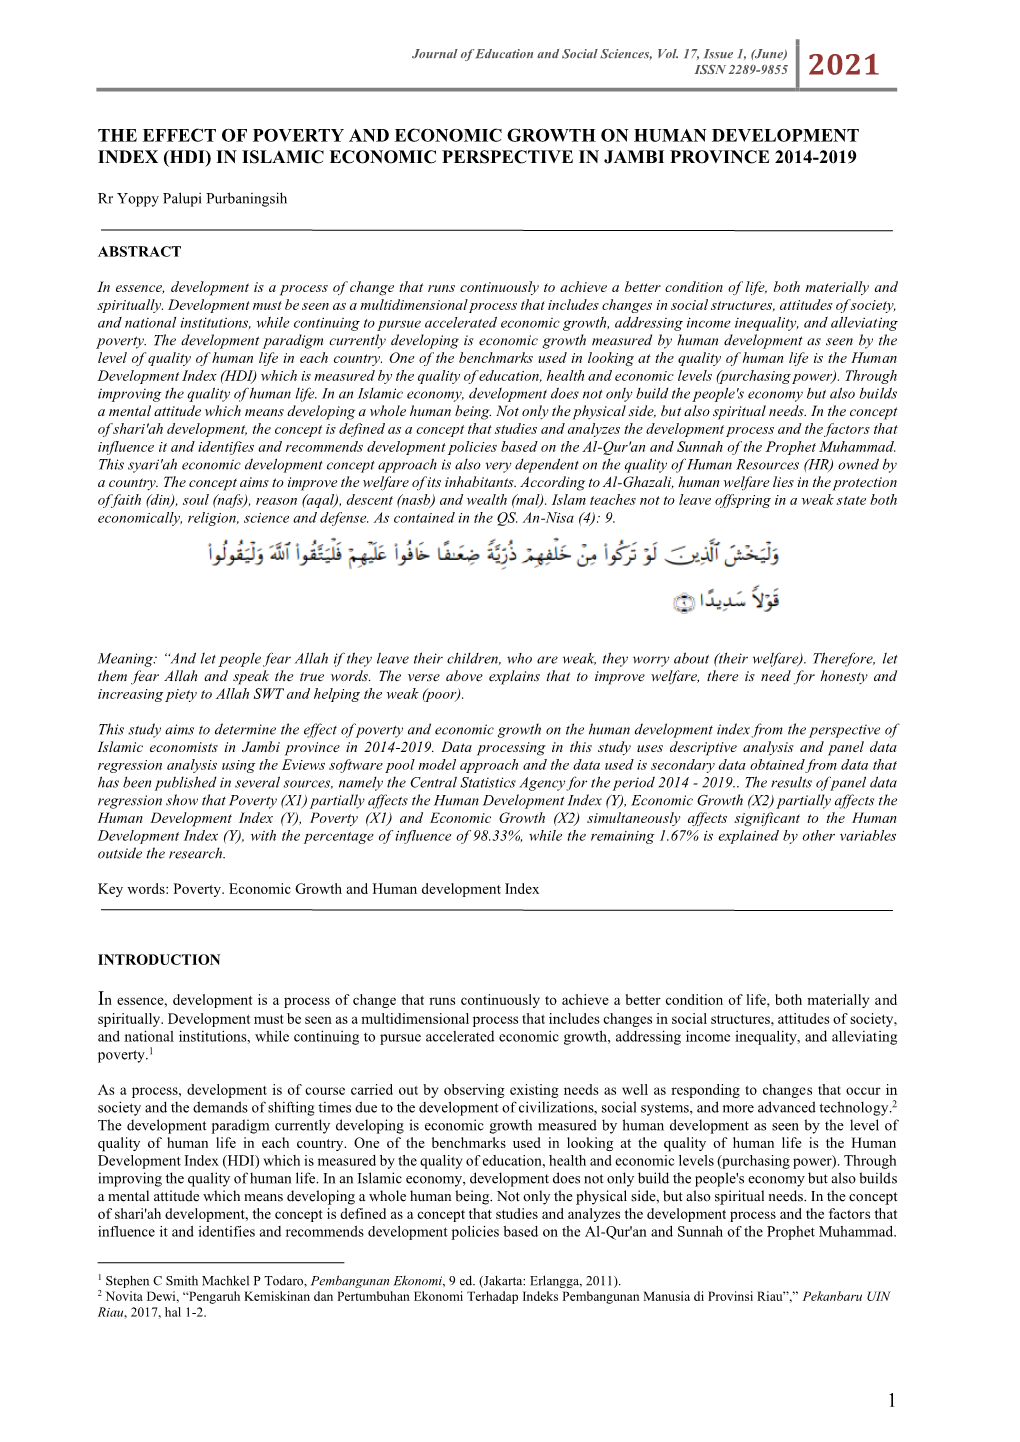 (Hdi) in Islamic Economic Perspective in Jambi Province 2014-2019